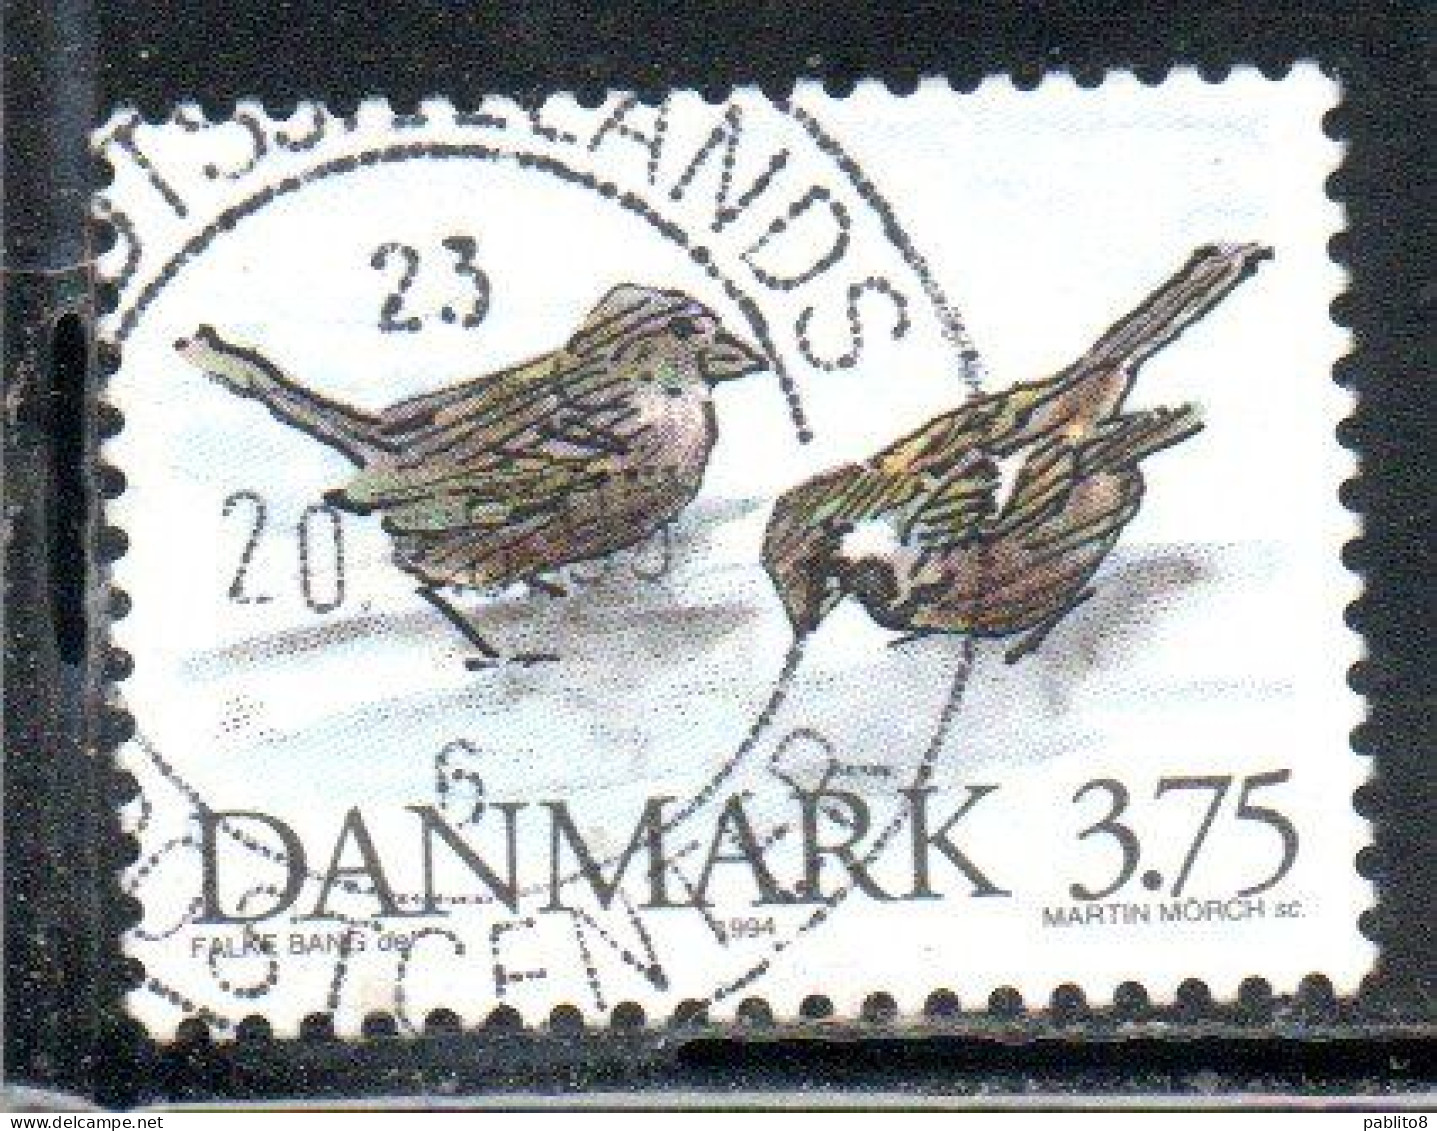 DANEMARK DANMARK DENMARK DANIMARCA 1994 WILD FAUNA ANIMALS BIRDS HOUSE SPARROWS 3.75k USED USATO OBLITERE' - Oblitérés